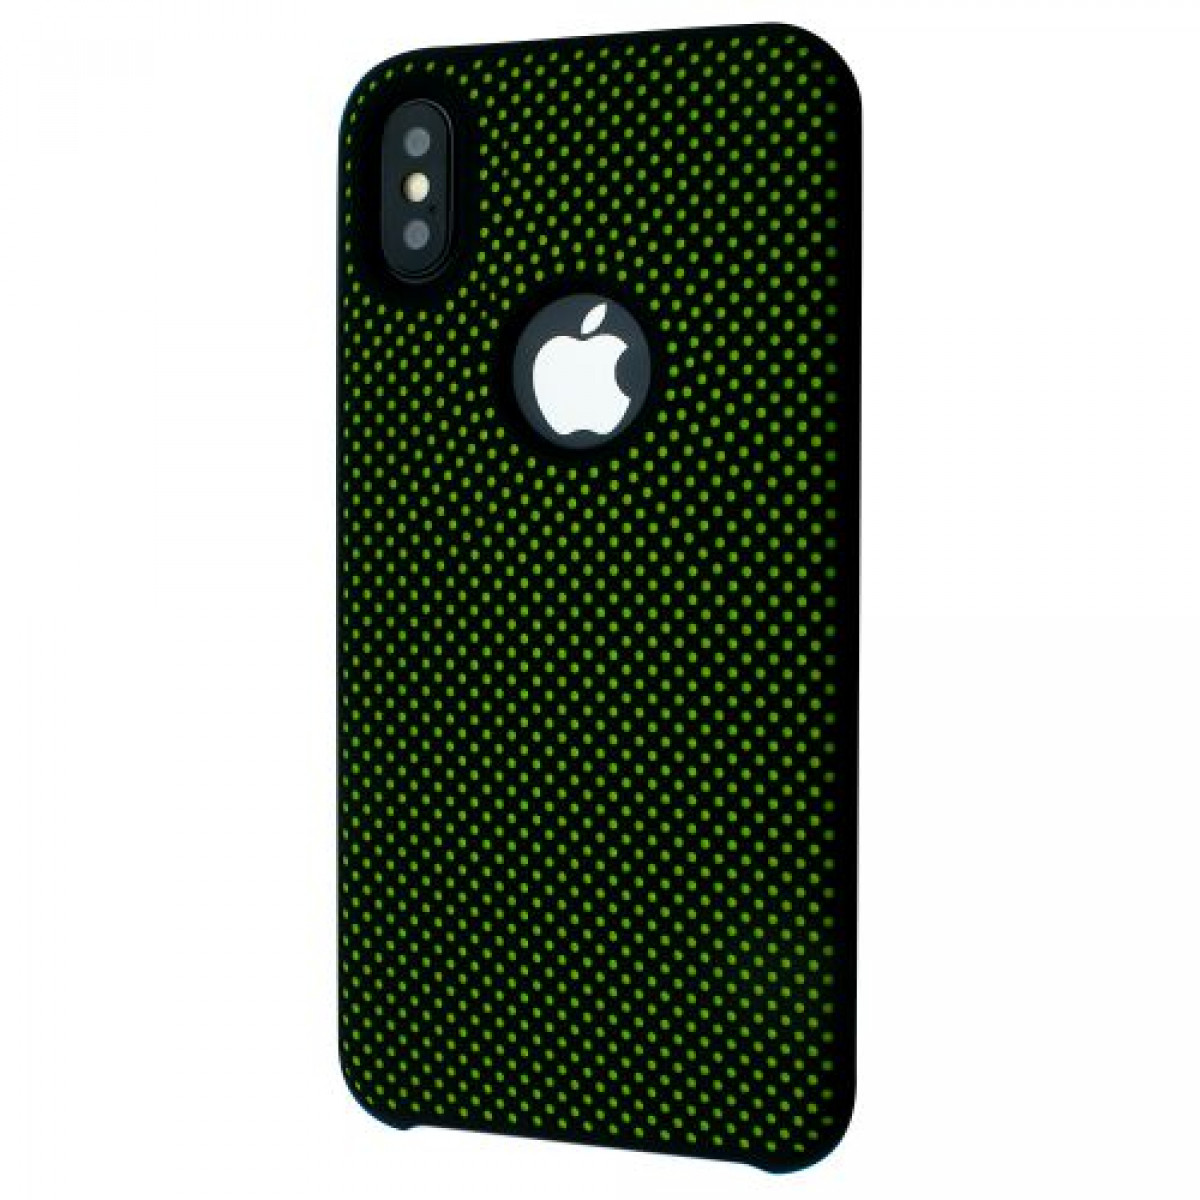 Dot Case Apple iPhone X/XS